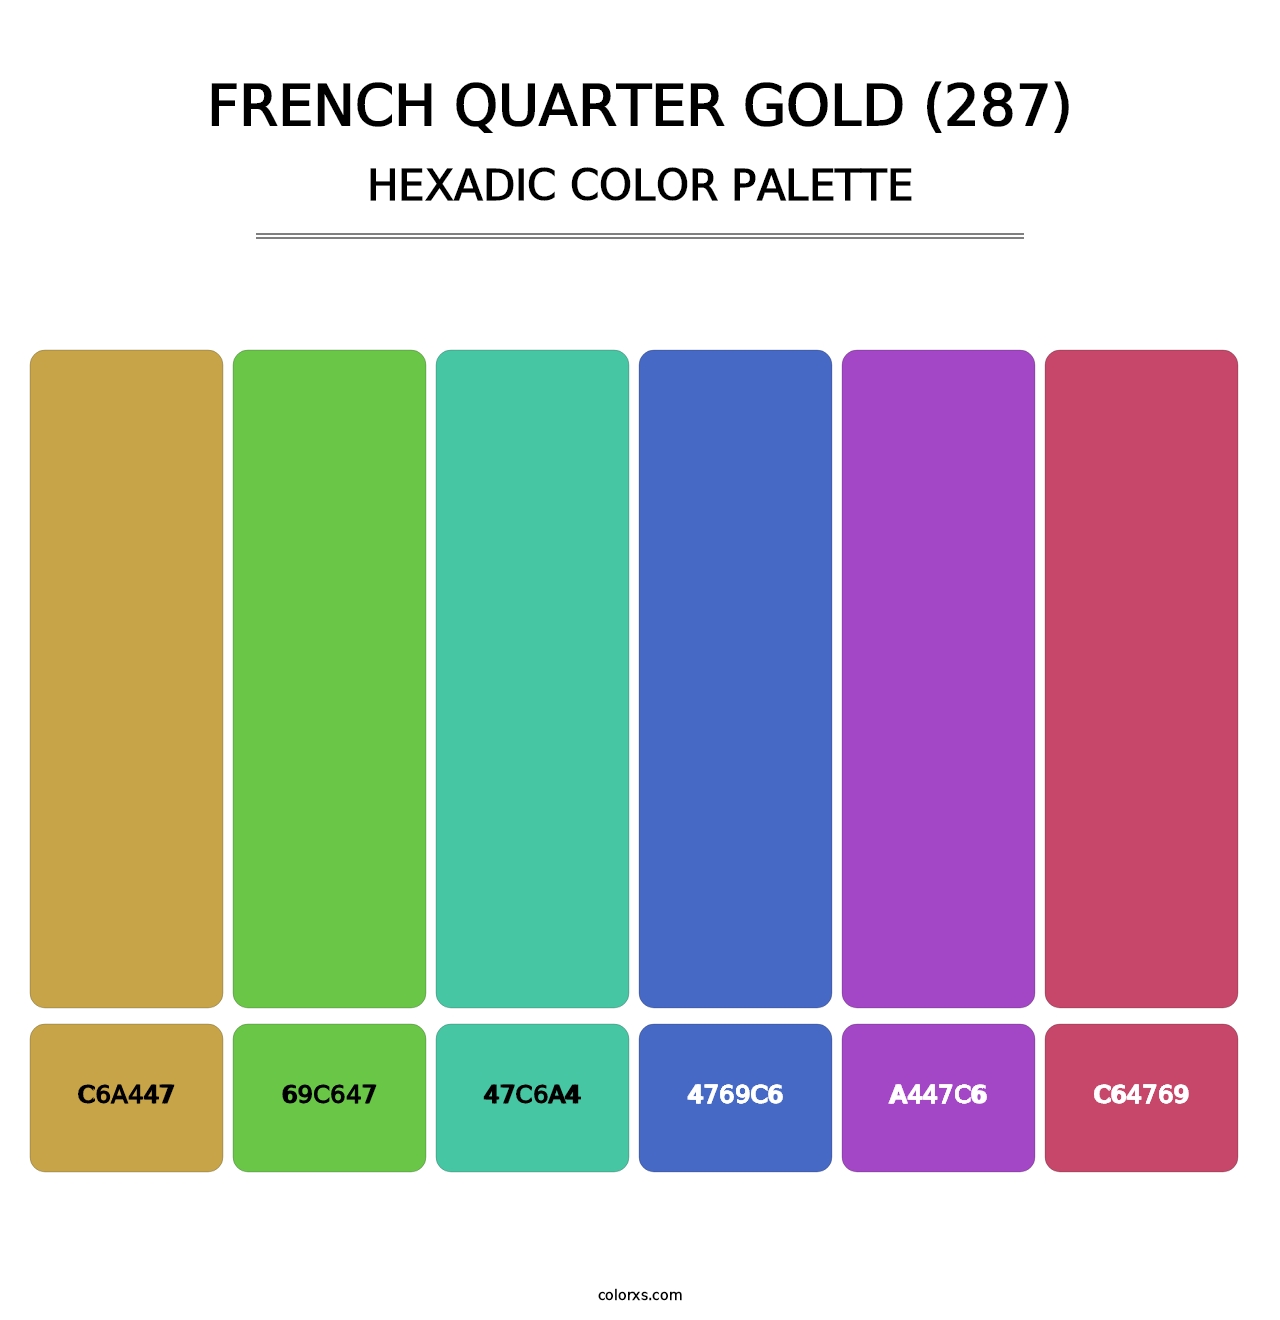 French Quarter Gold (287) - Hexadic Color Palette